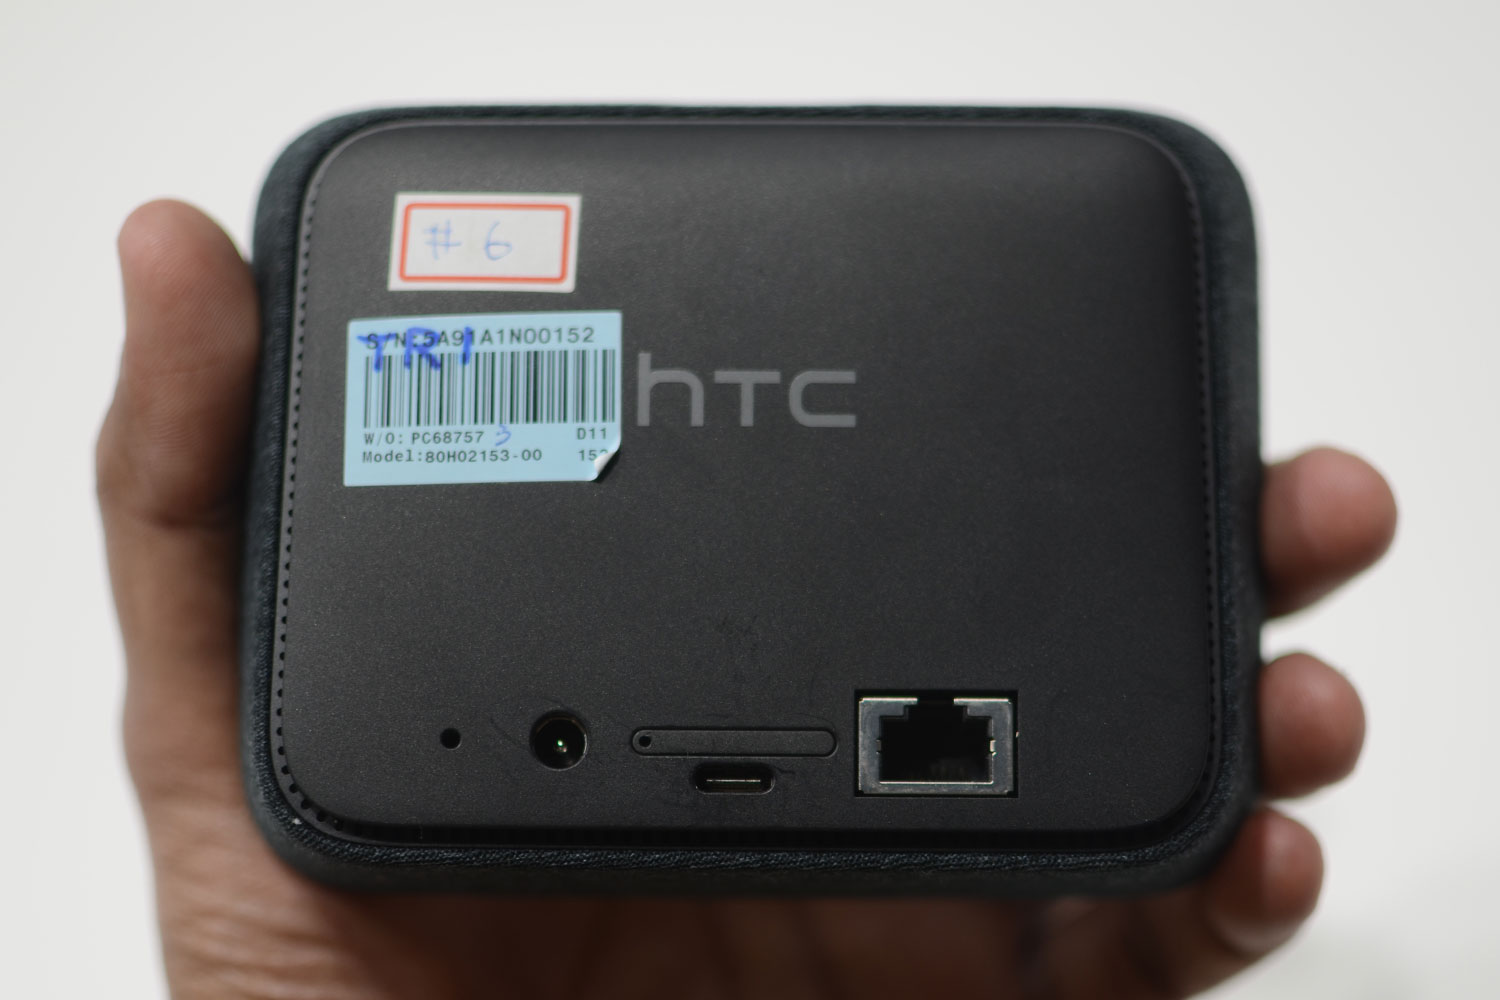 HTC Hub review